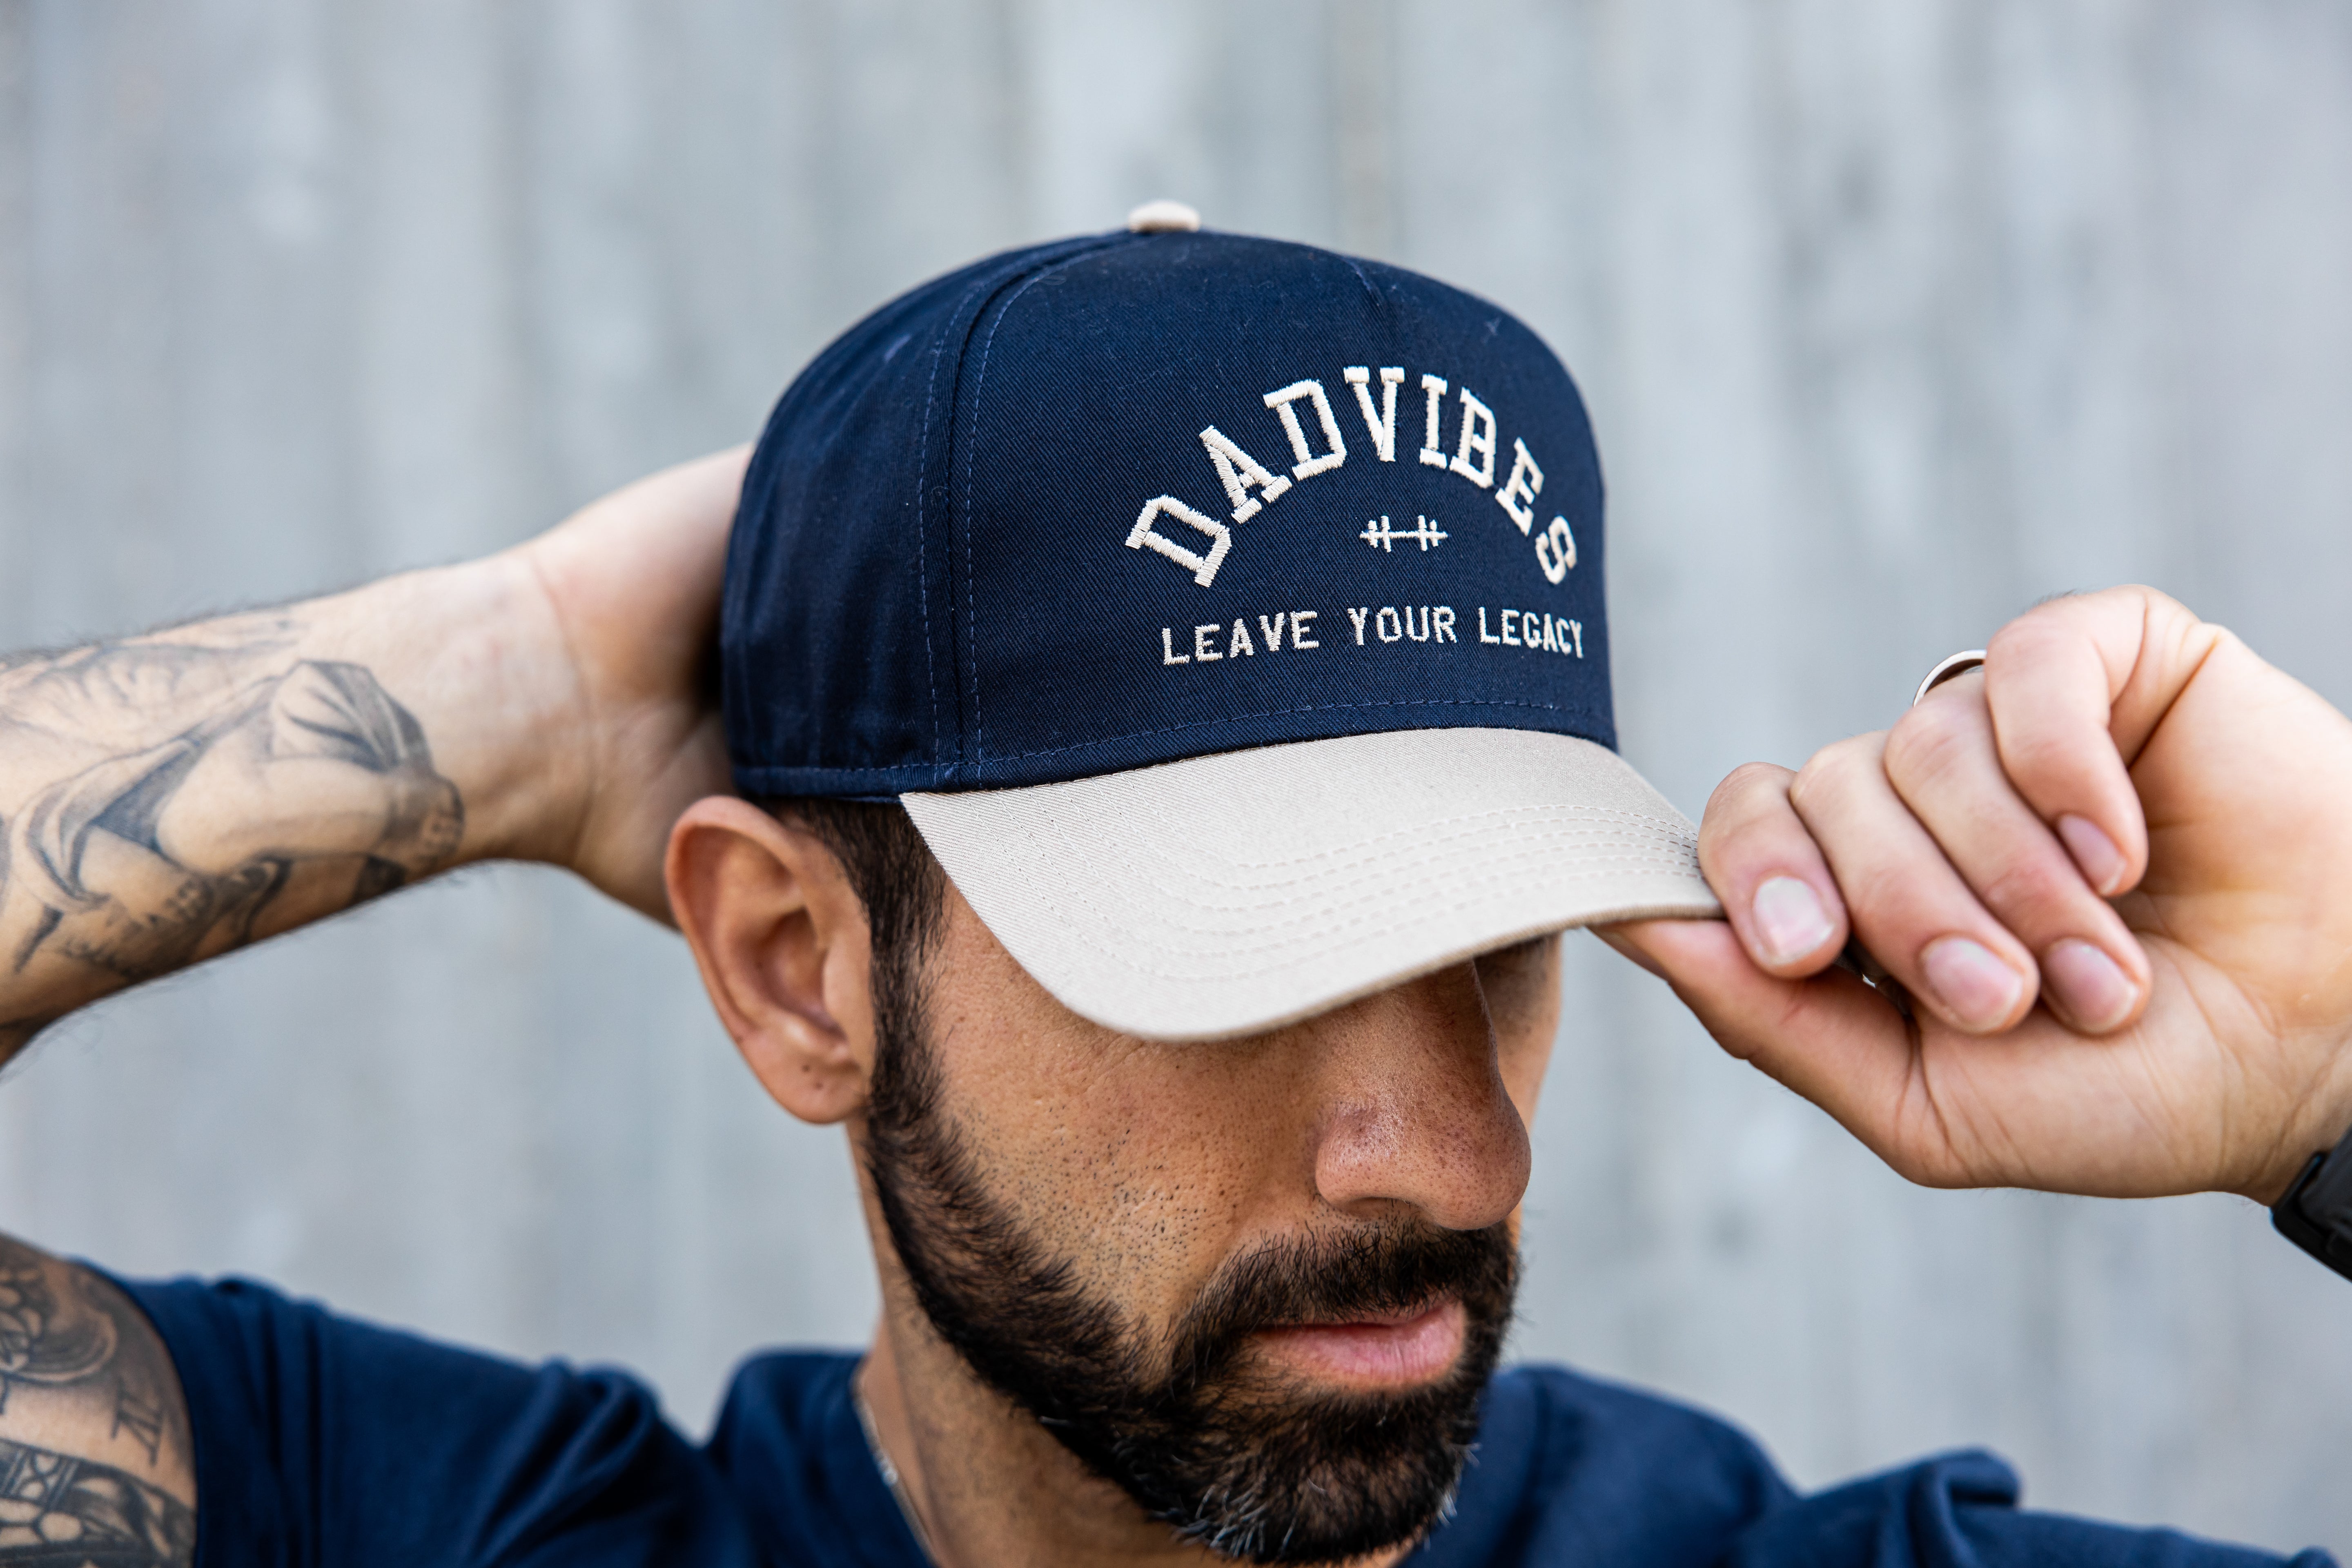 DadVibes 5 Panel Hat (Navy & Khaki)